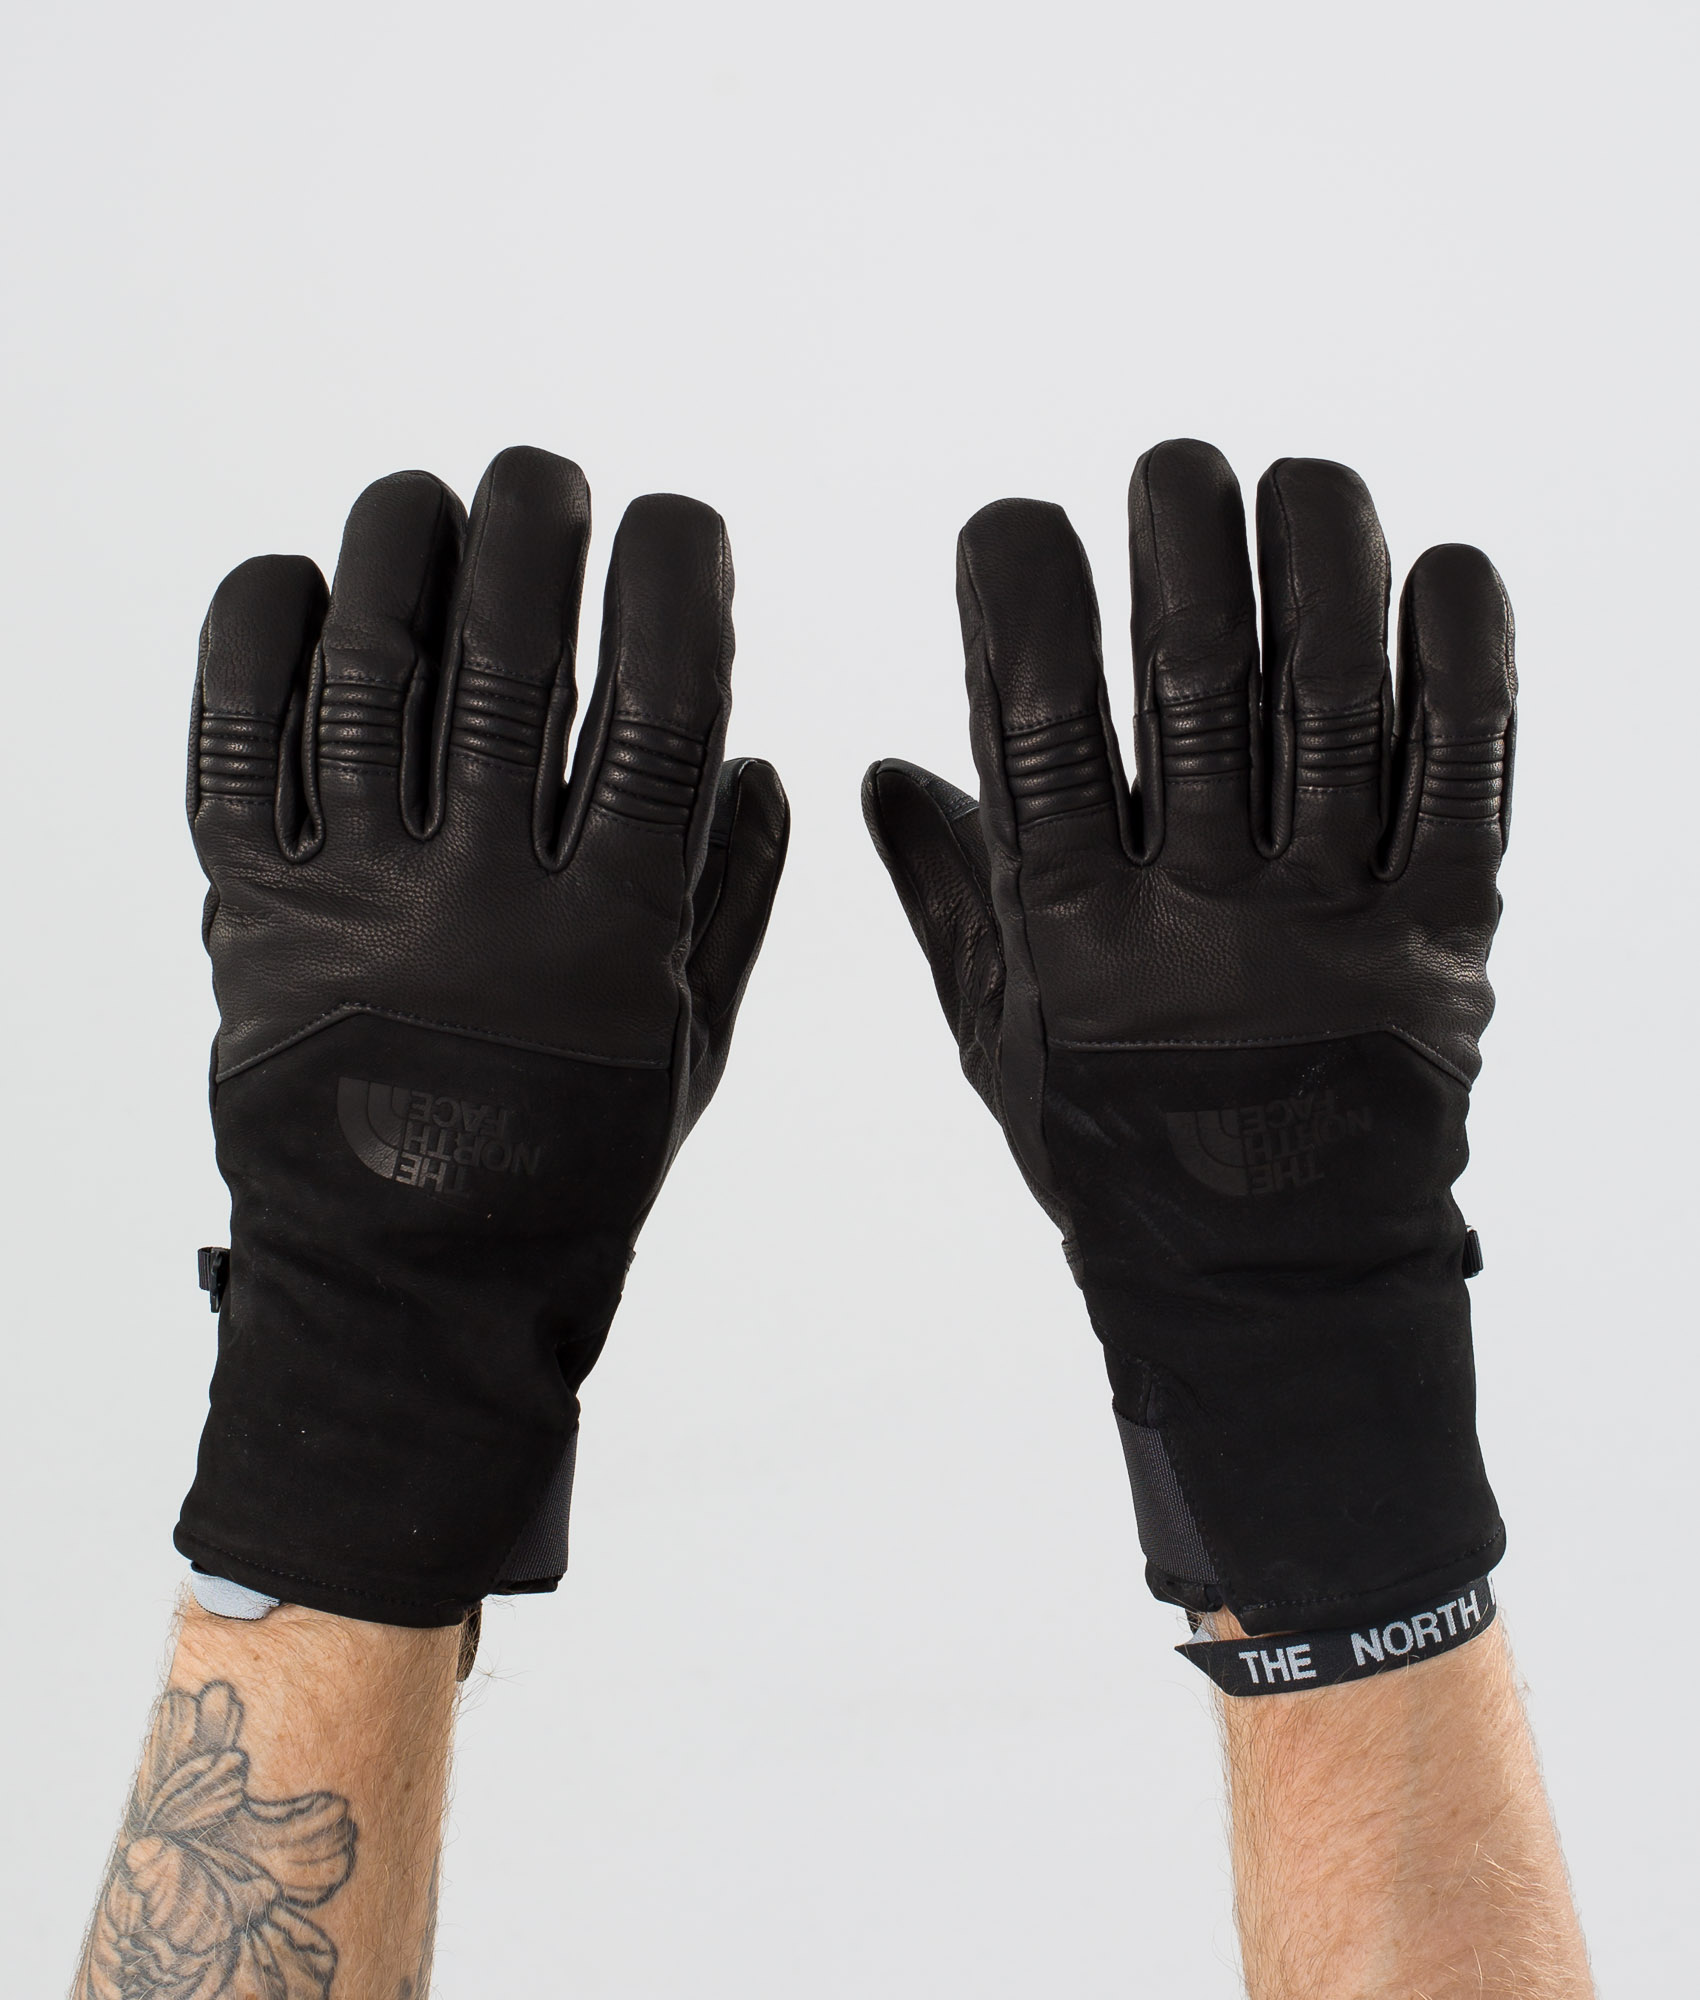 north face inner gloves